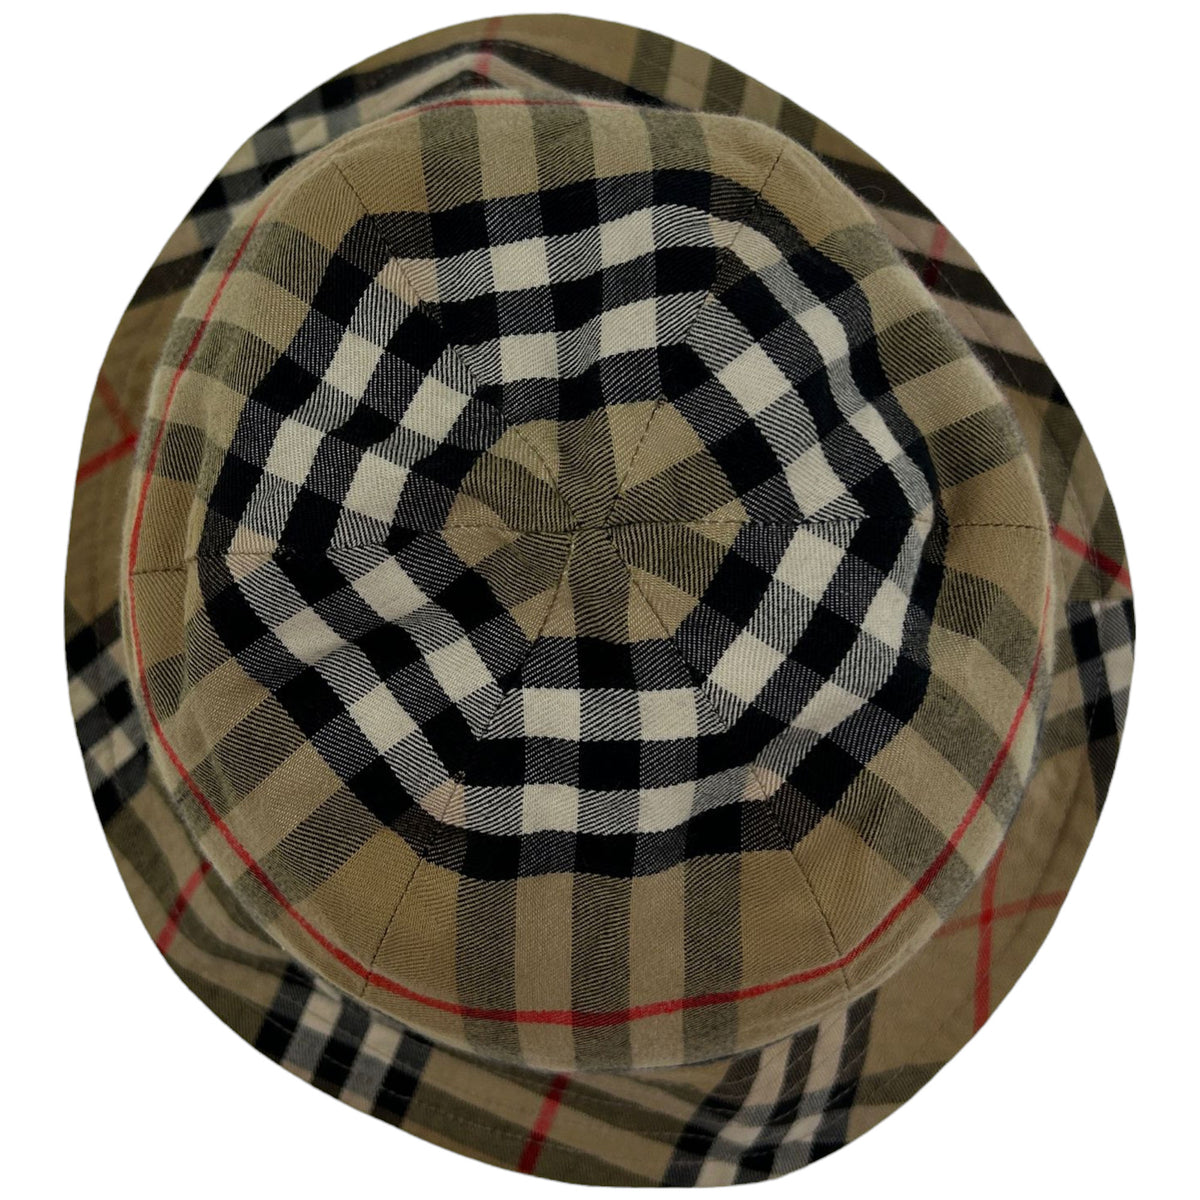 Vintage Burberry Nova Check Reversible Bucket Hat